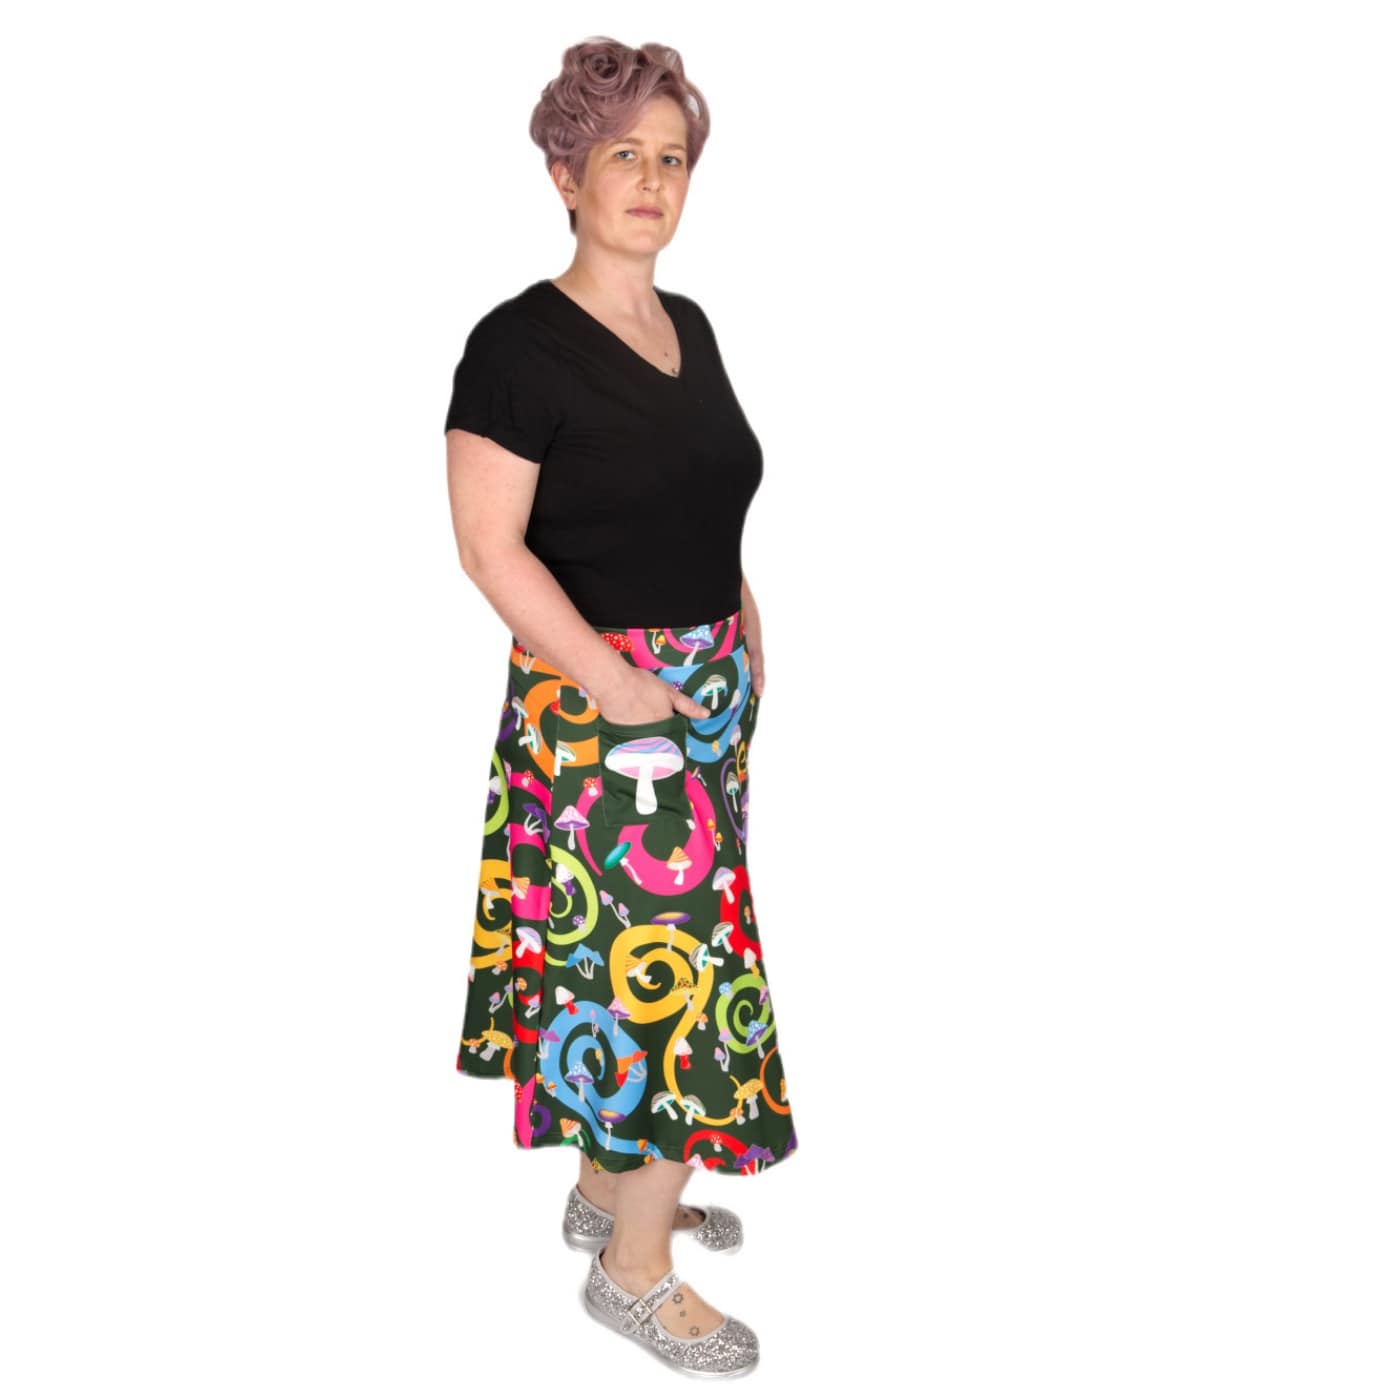 Toadstool Original Skirt by RainbowsAndFairies.com.au (Mushroom - Psychedelic Swirls - Retro - Kitsch - Aline Skirt With Pockets - Vintage Inspired) - SKU: CL_OSKRT_TOADS_ORG - Pic-05